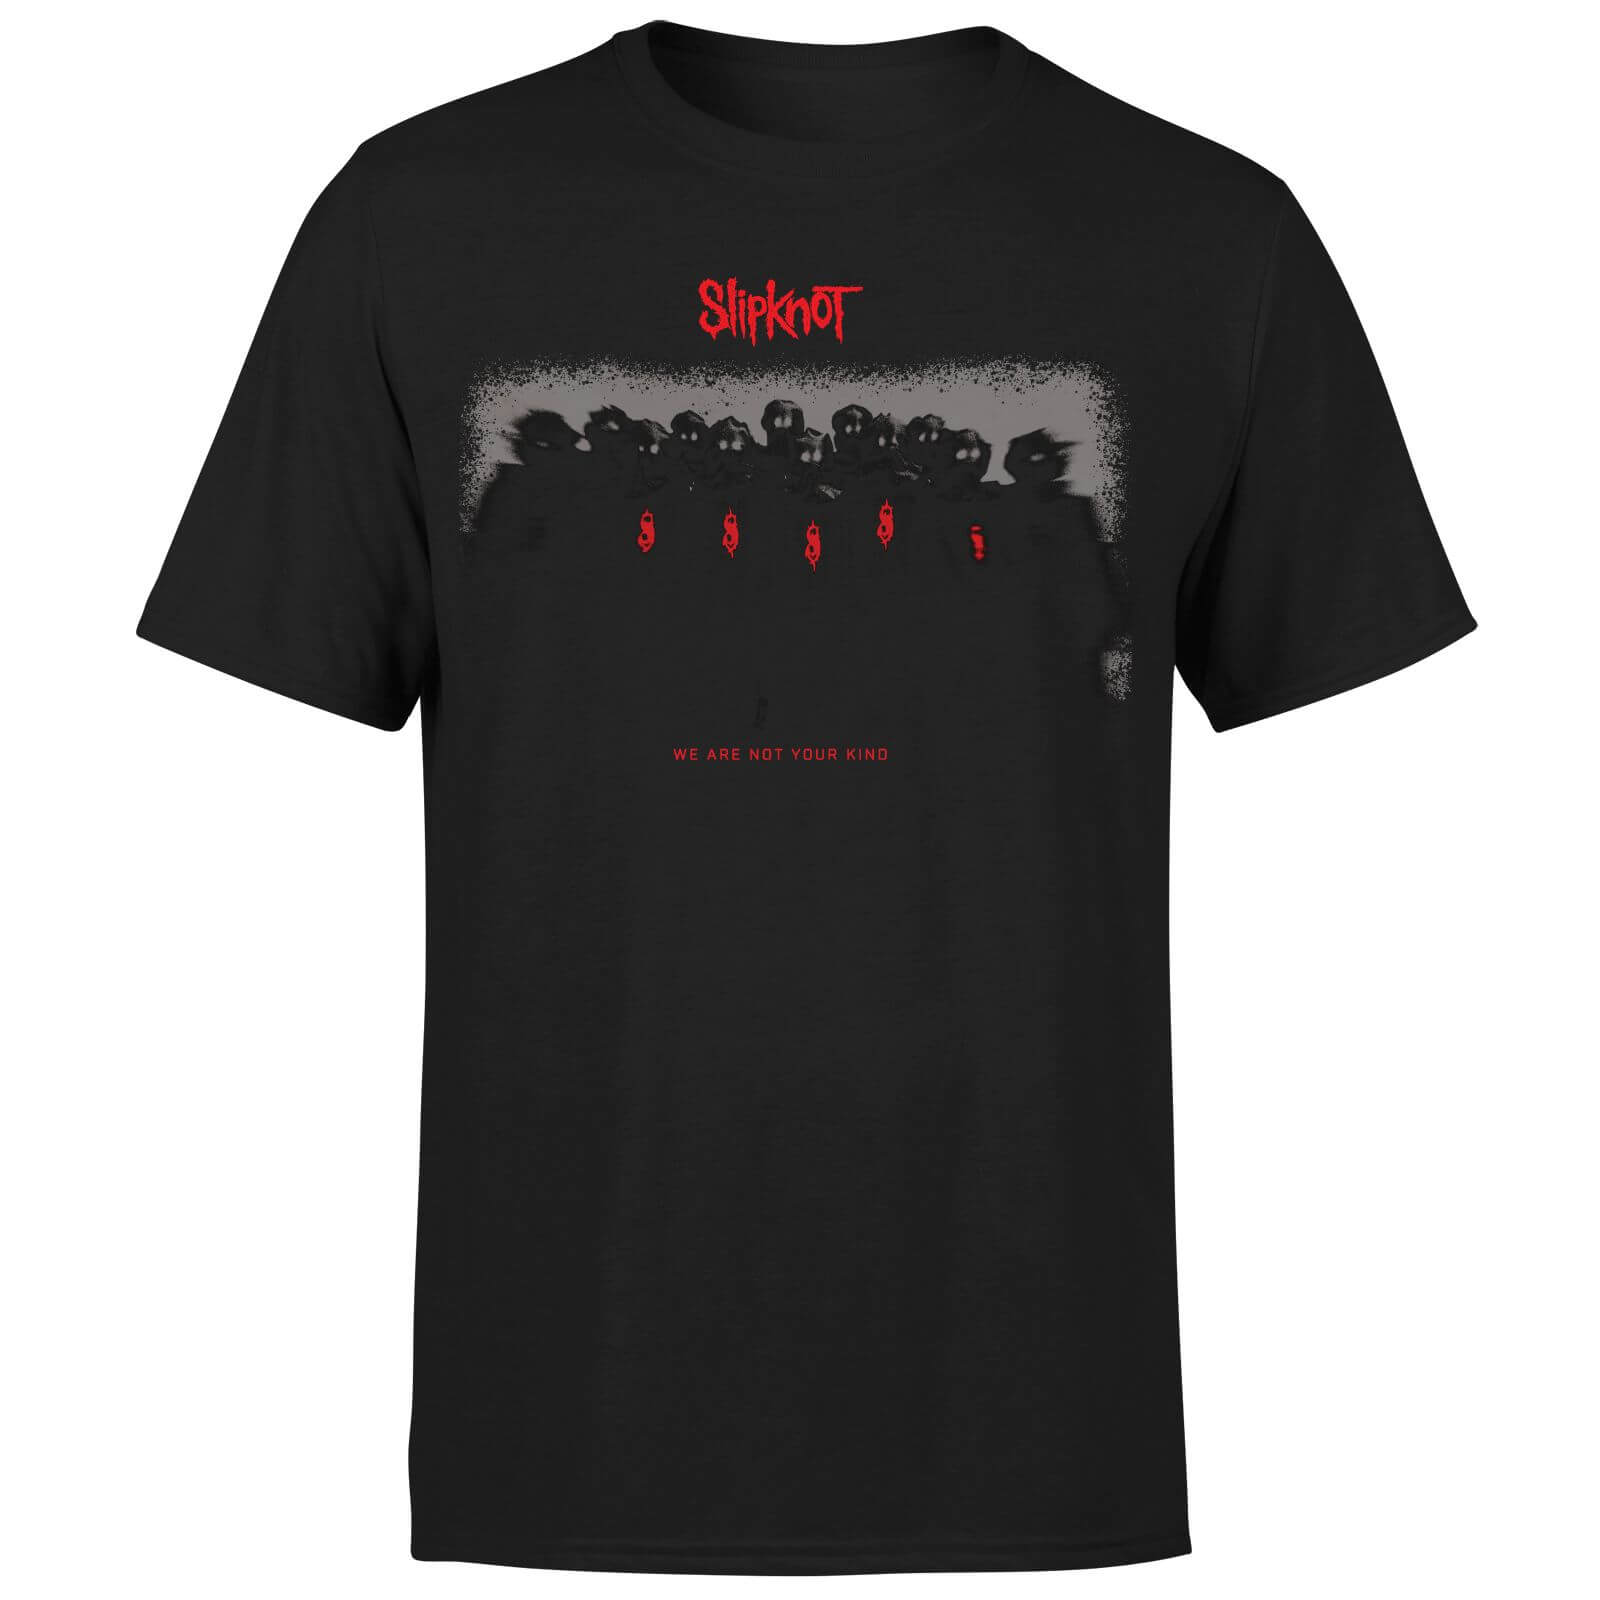 Slipknot Maggots T-Shirt - Black - M - Black